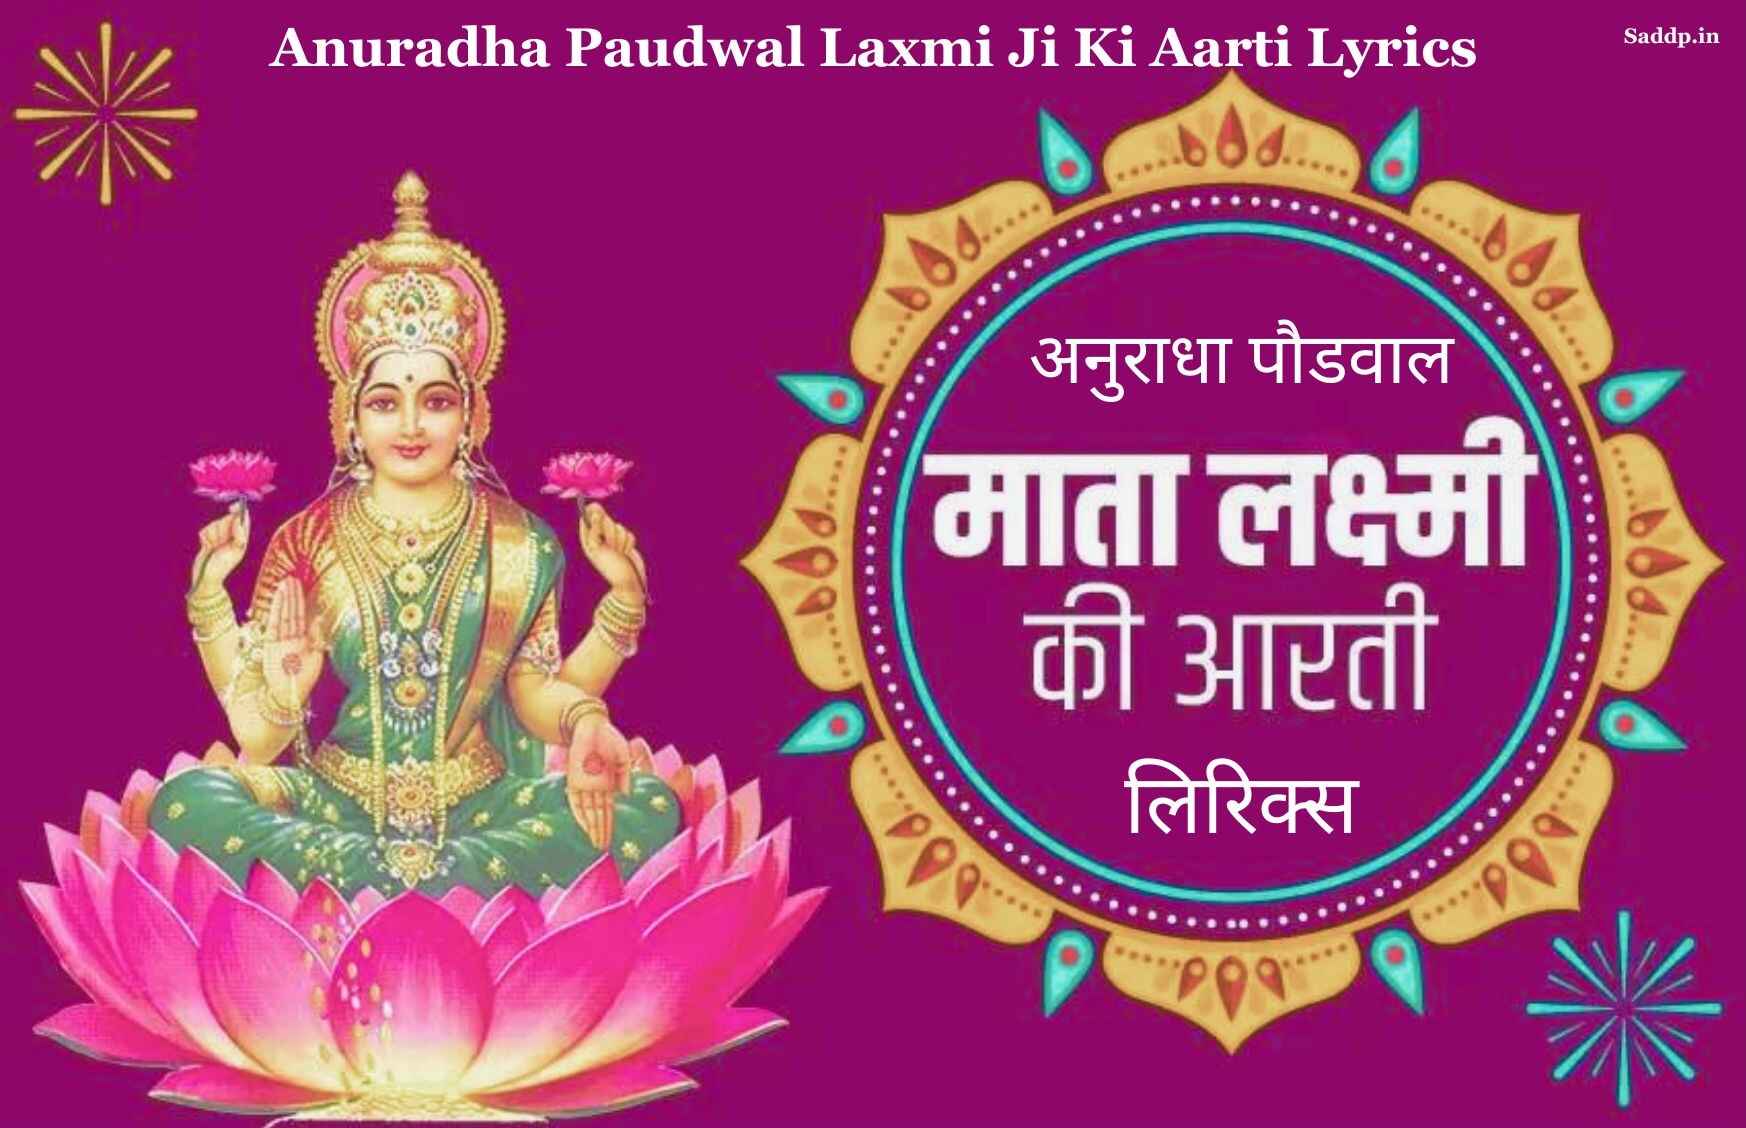 Anuradha Paudwal Laxmi Ji Ki Aarti Lyrics